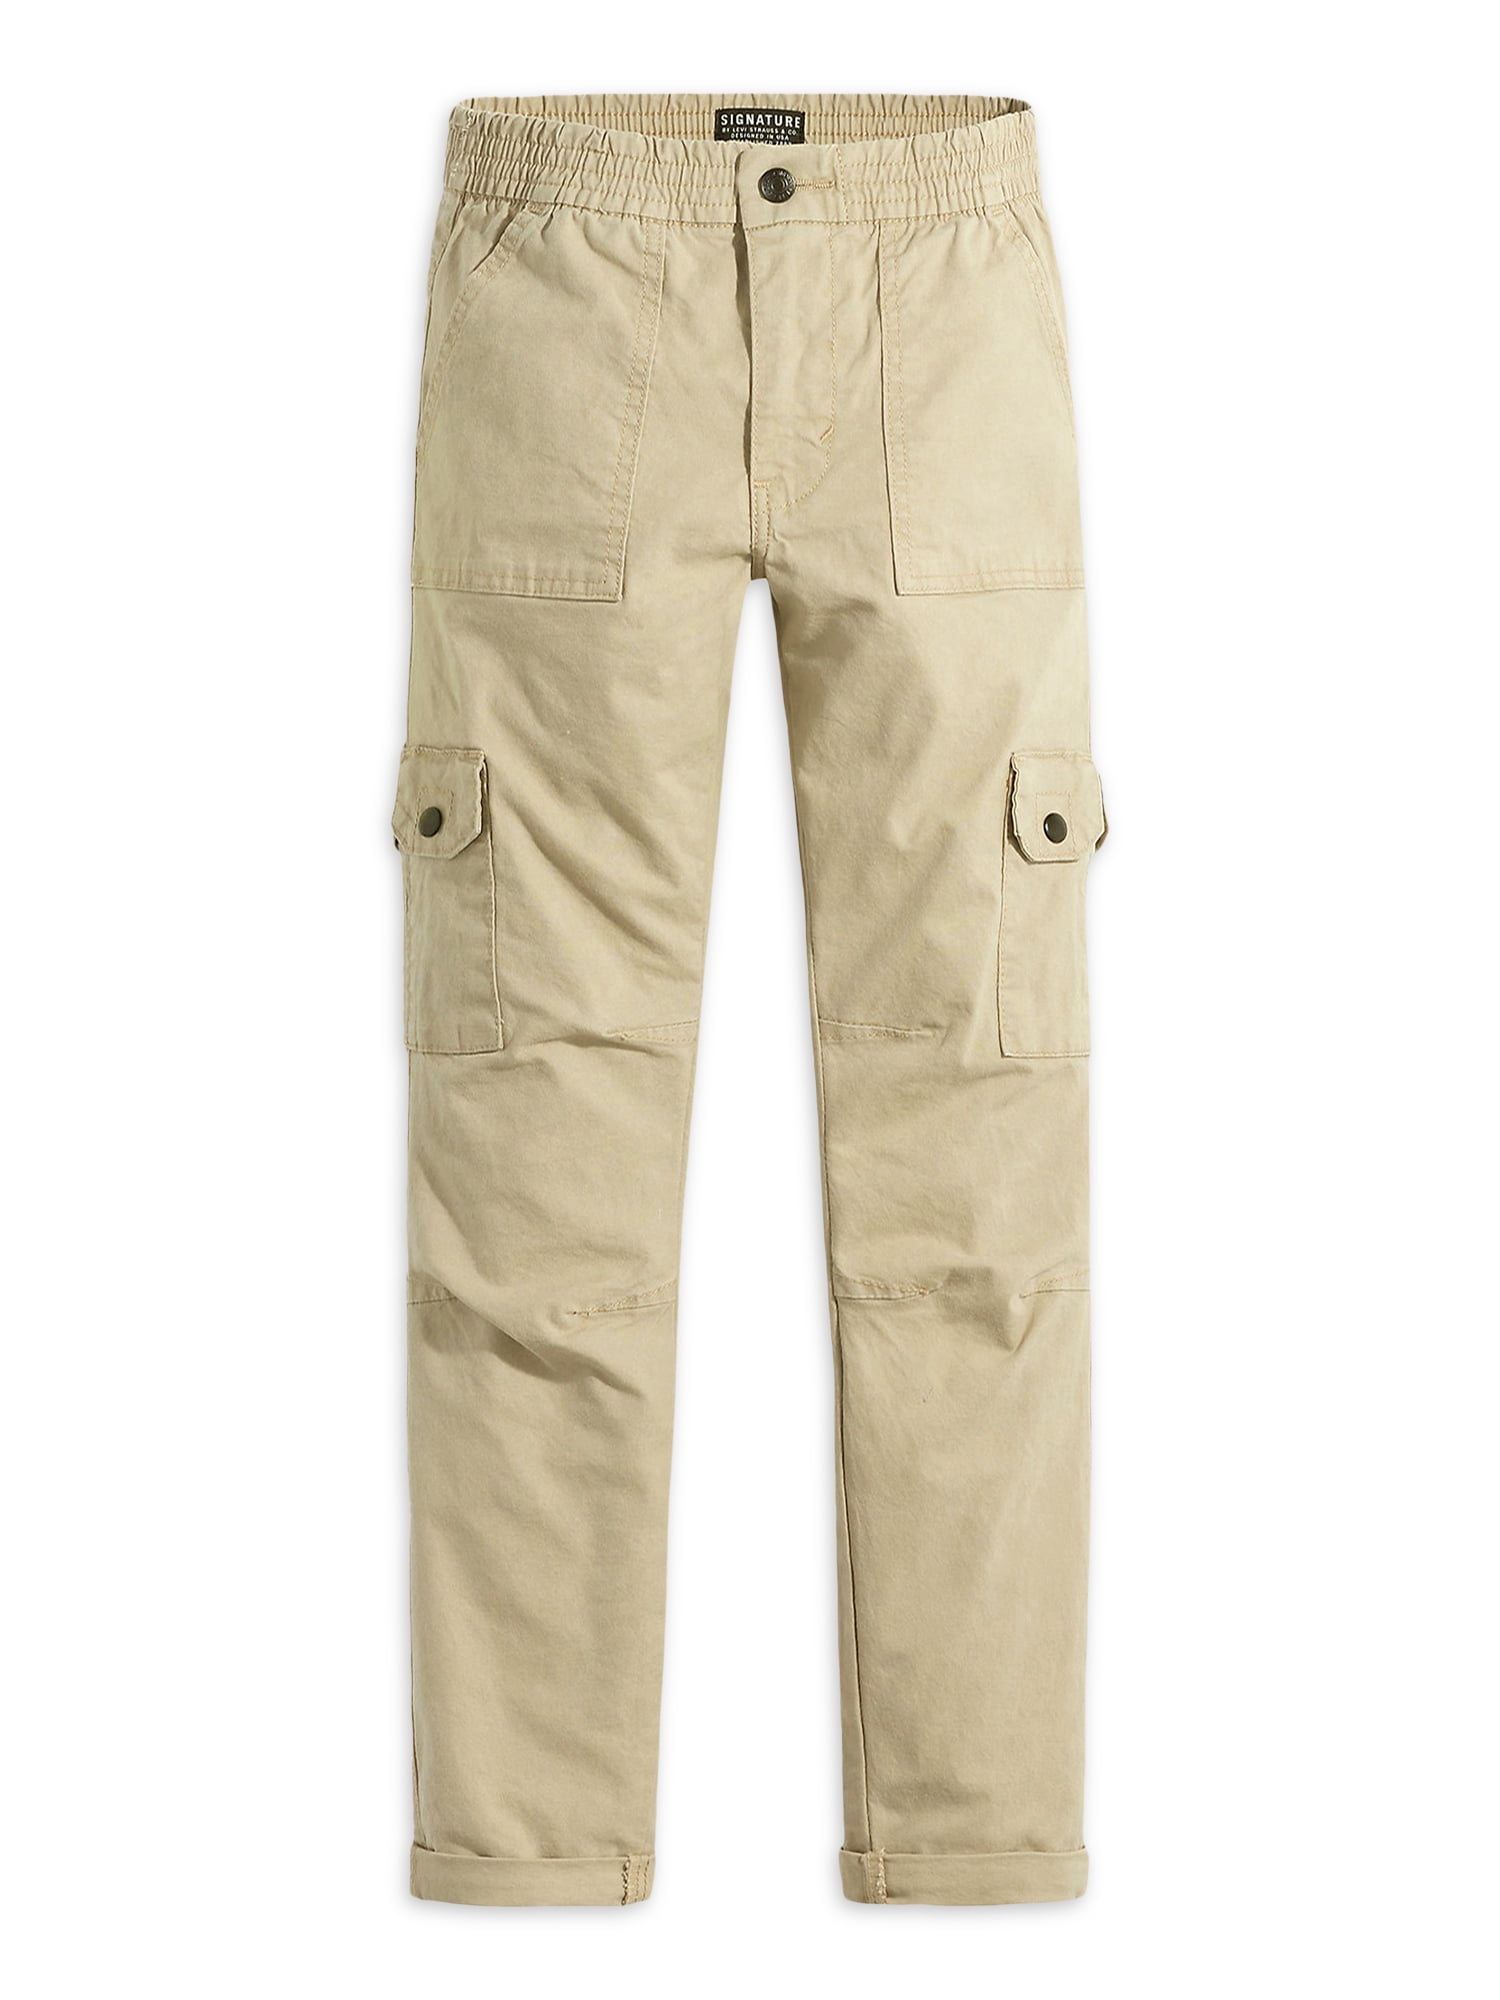 Levi's Signature Levi Strauss Boys Cargo Pants Medium M (7X-8) Light  Mocha NWT | eBay